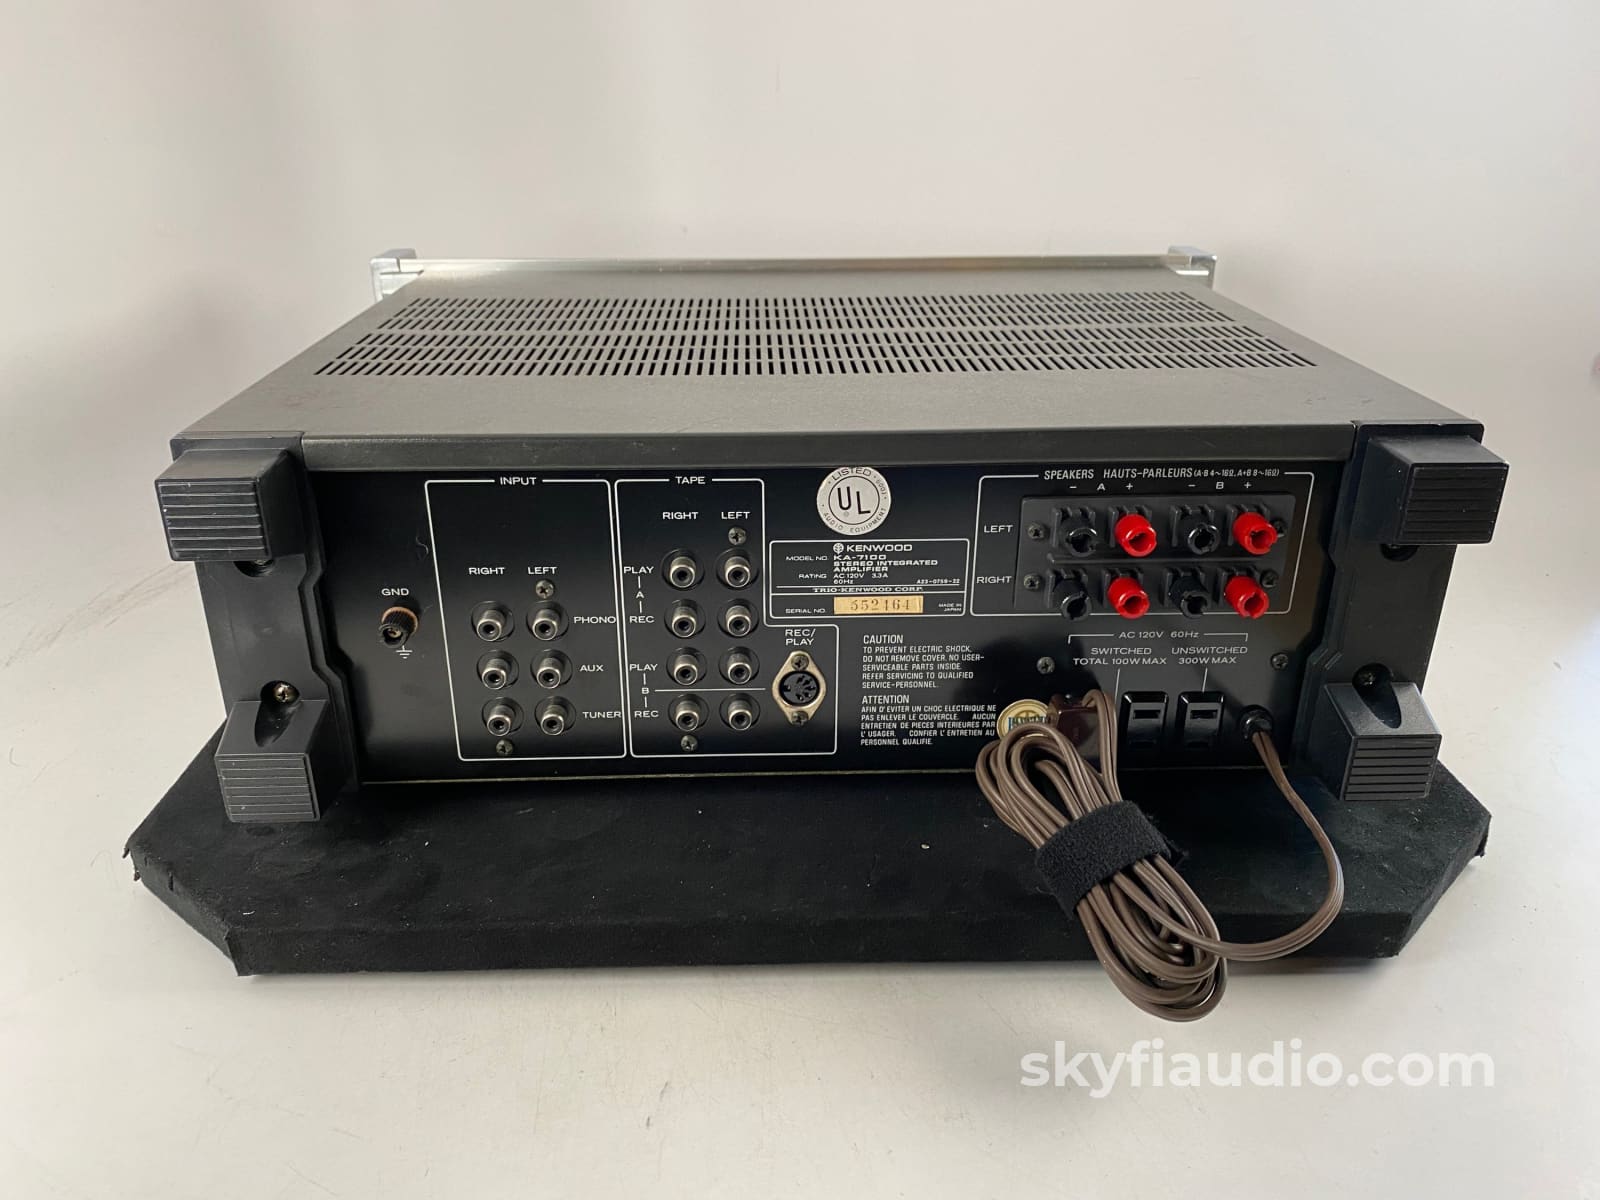 Kenwood Ka-7100 Vintage Dc Stereo Integrated Amplifier W/Rack Handles - Serviced